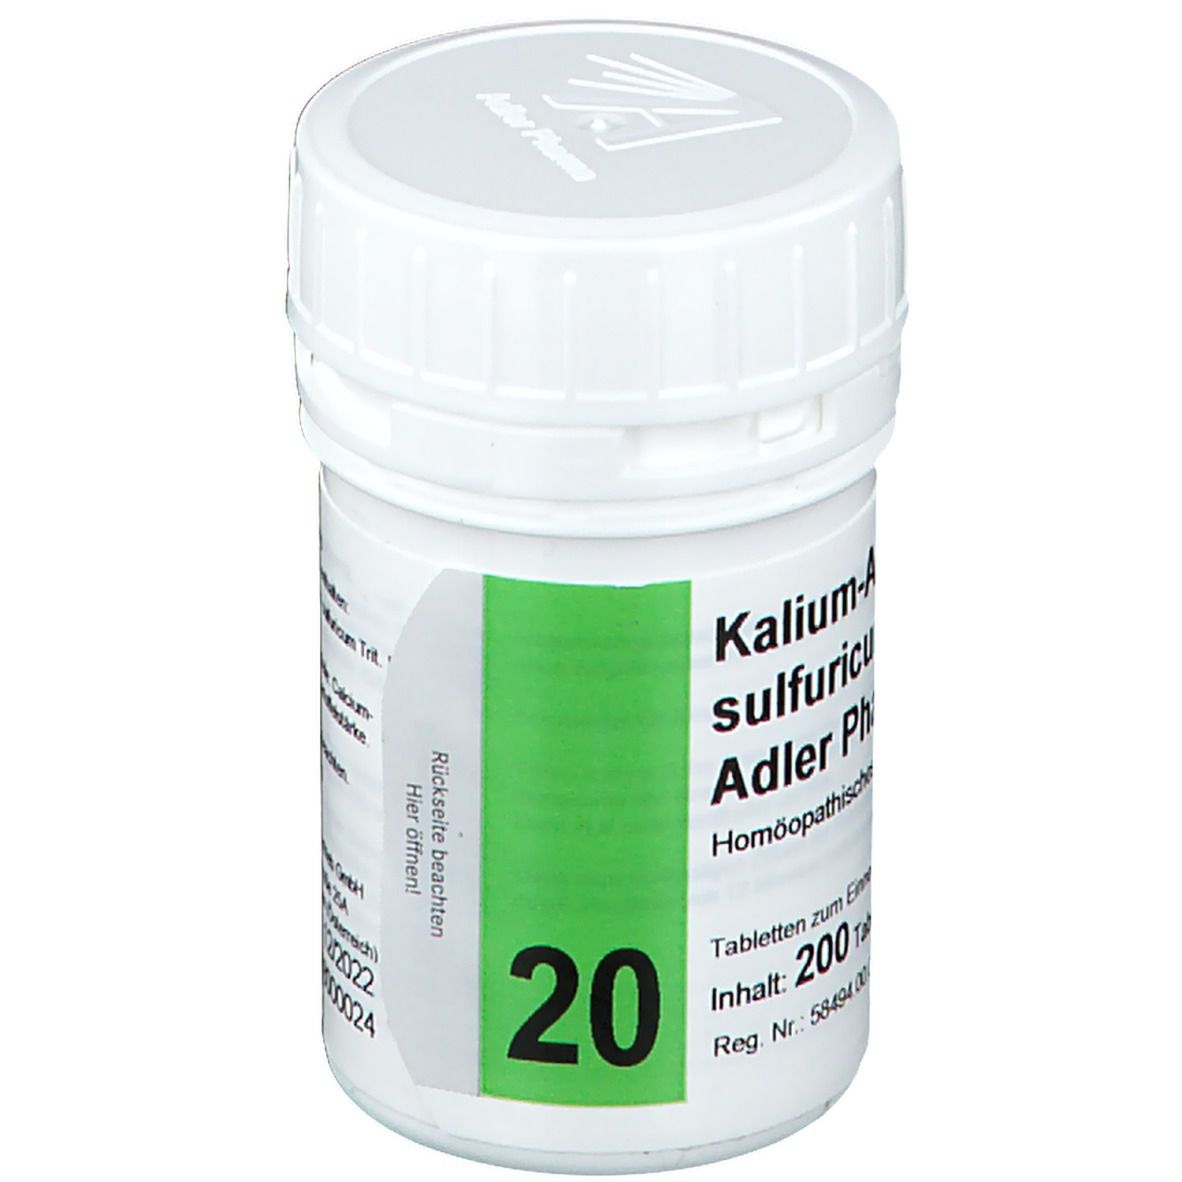 Adler Pharma Kalium – Aluminium sulfuricum D12 Biochemie nach Dr. Schüßler Nr. 20